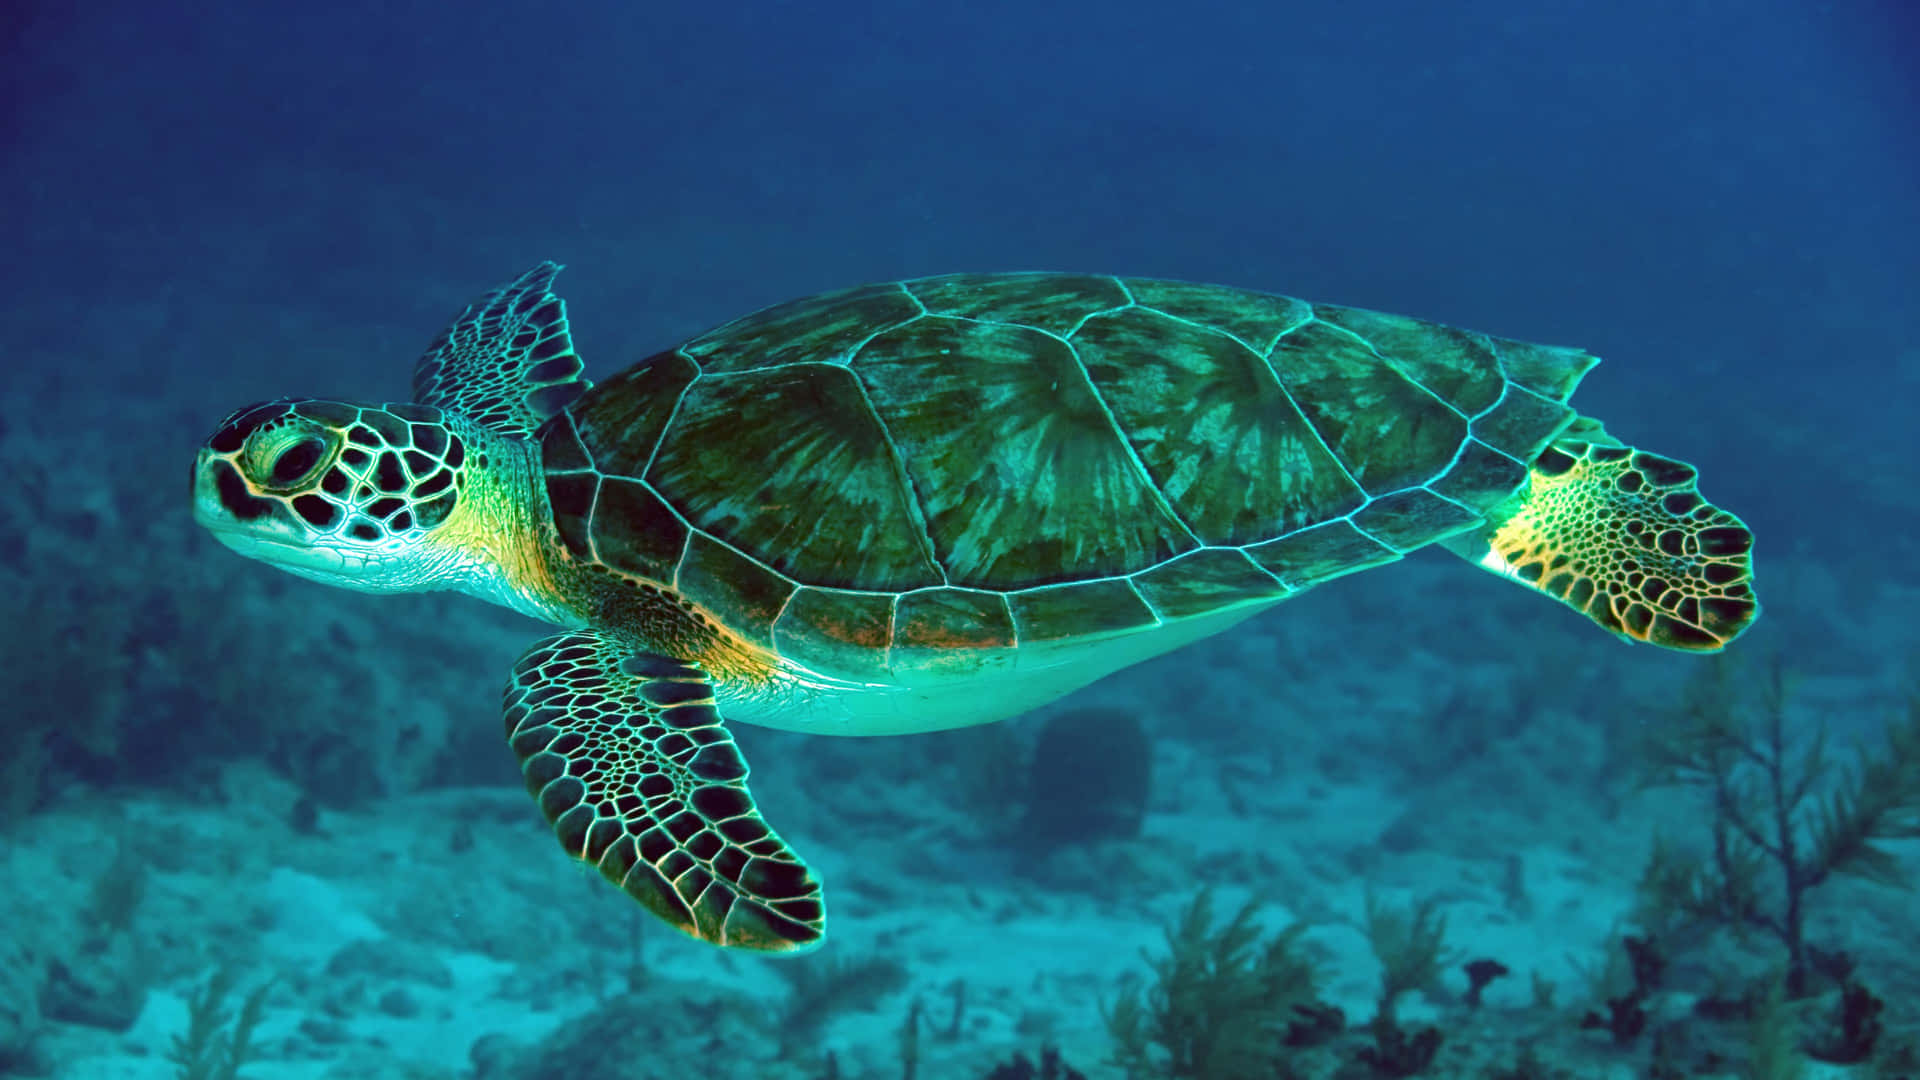 Majestic Sea Turtle Swimming in the Ocean